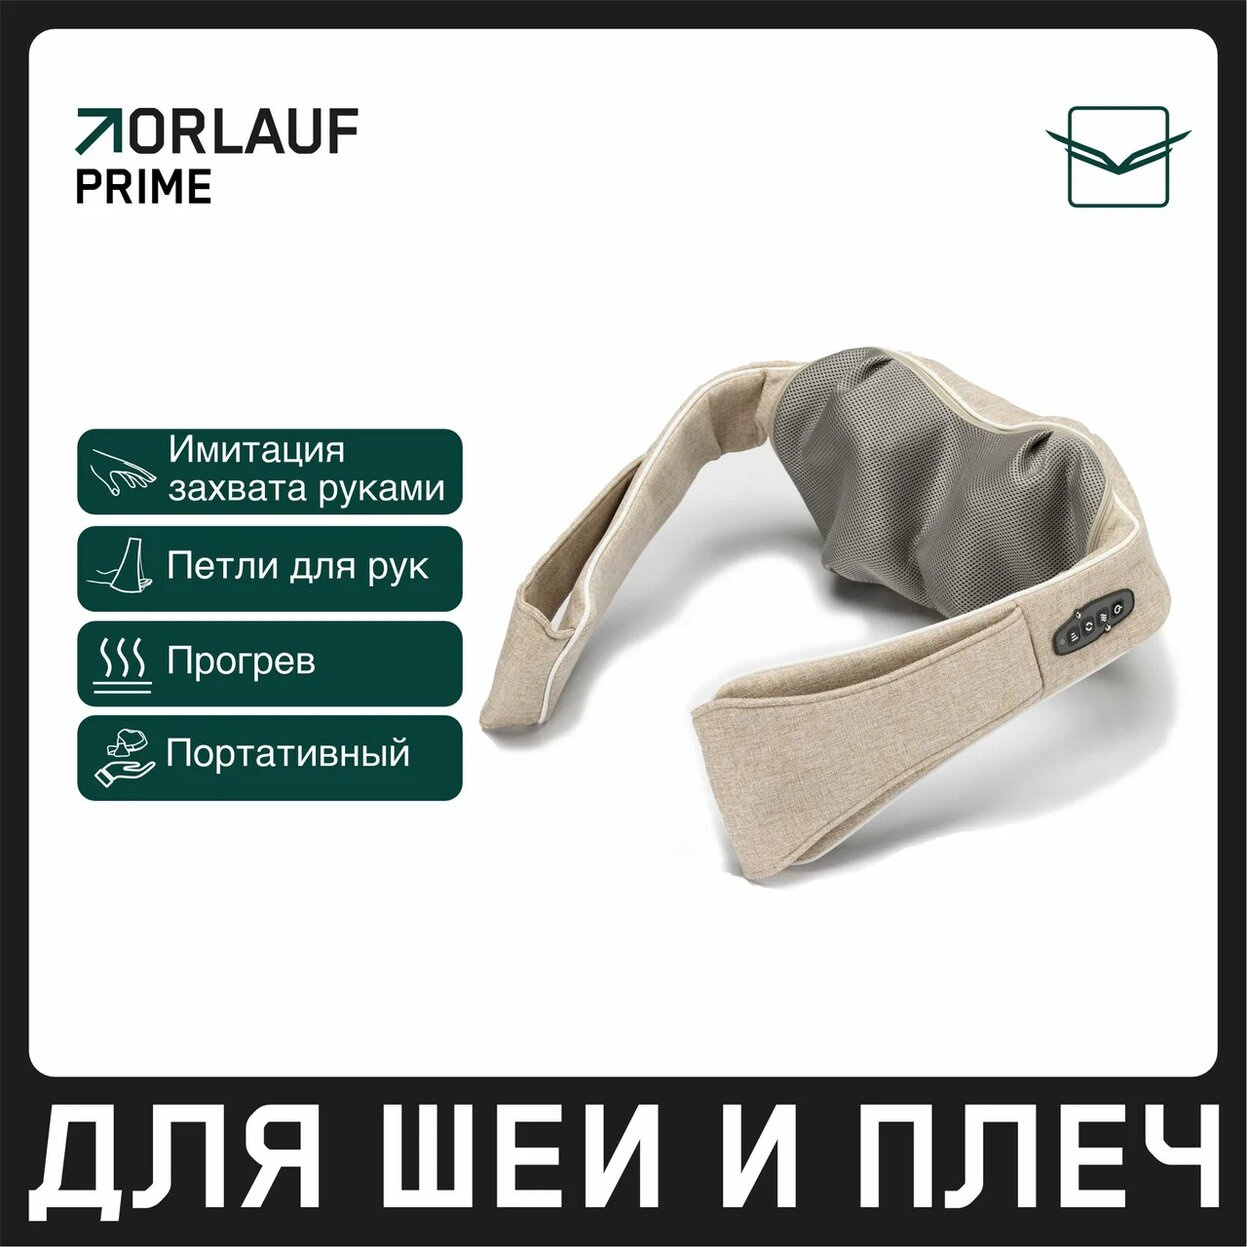 Orlauf Prime из каталога массажеров в Москве по цене 11900 ₽